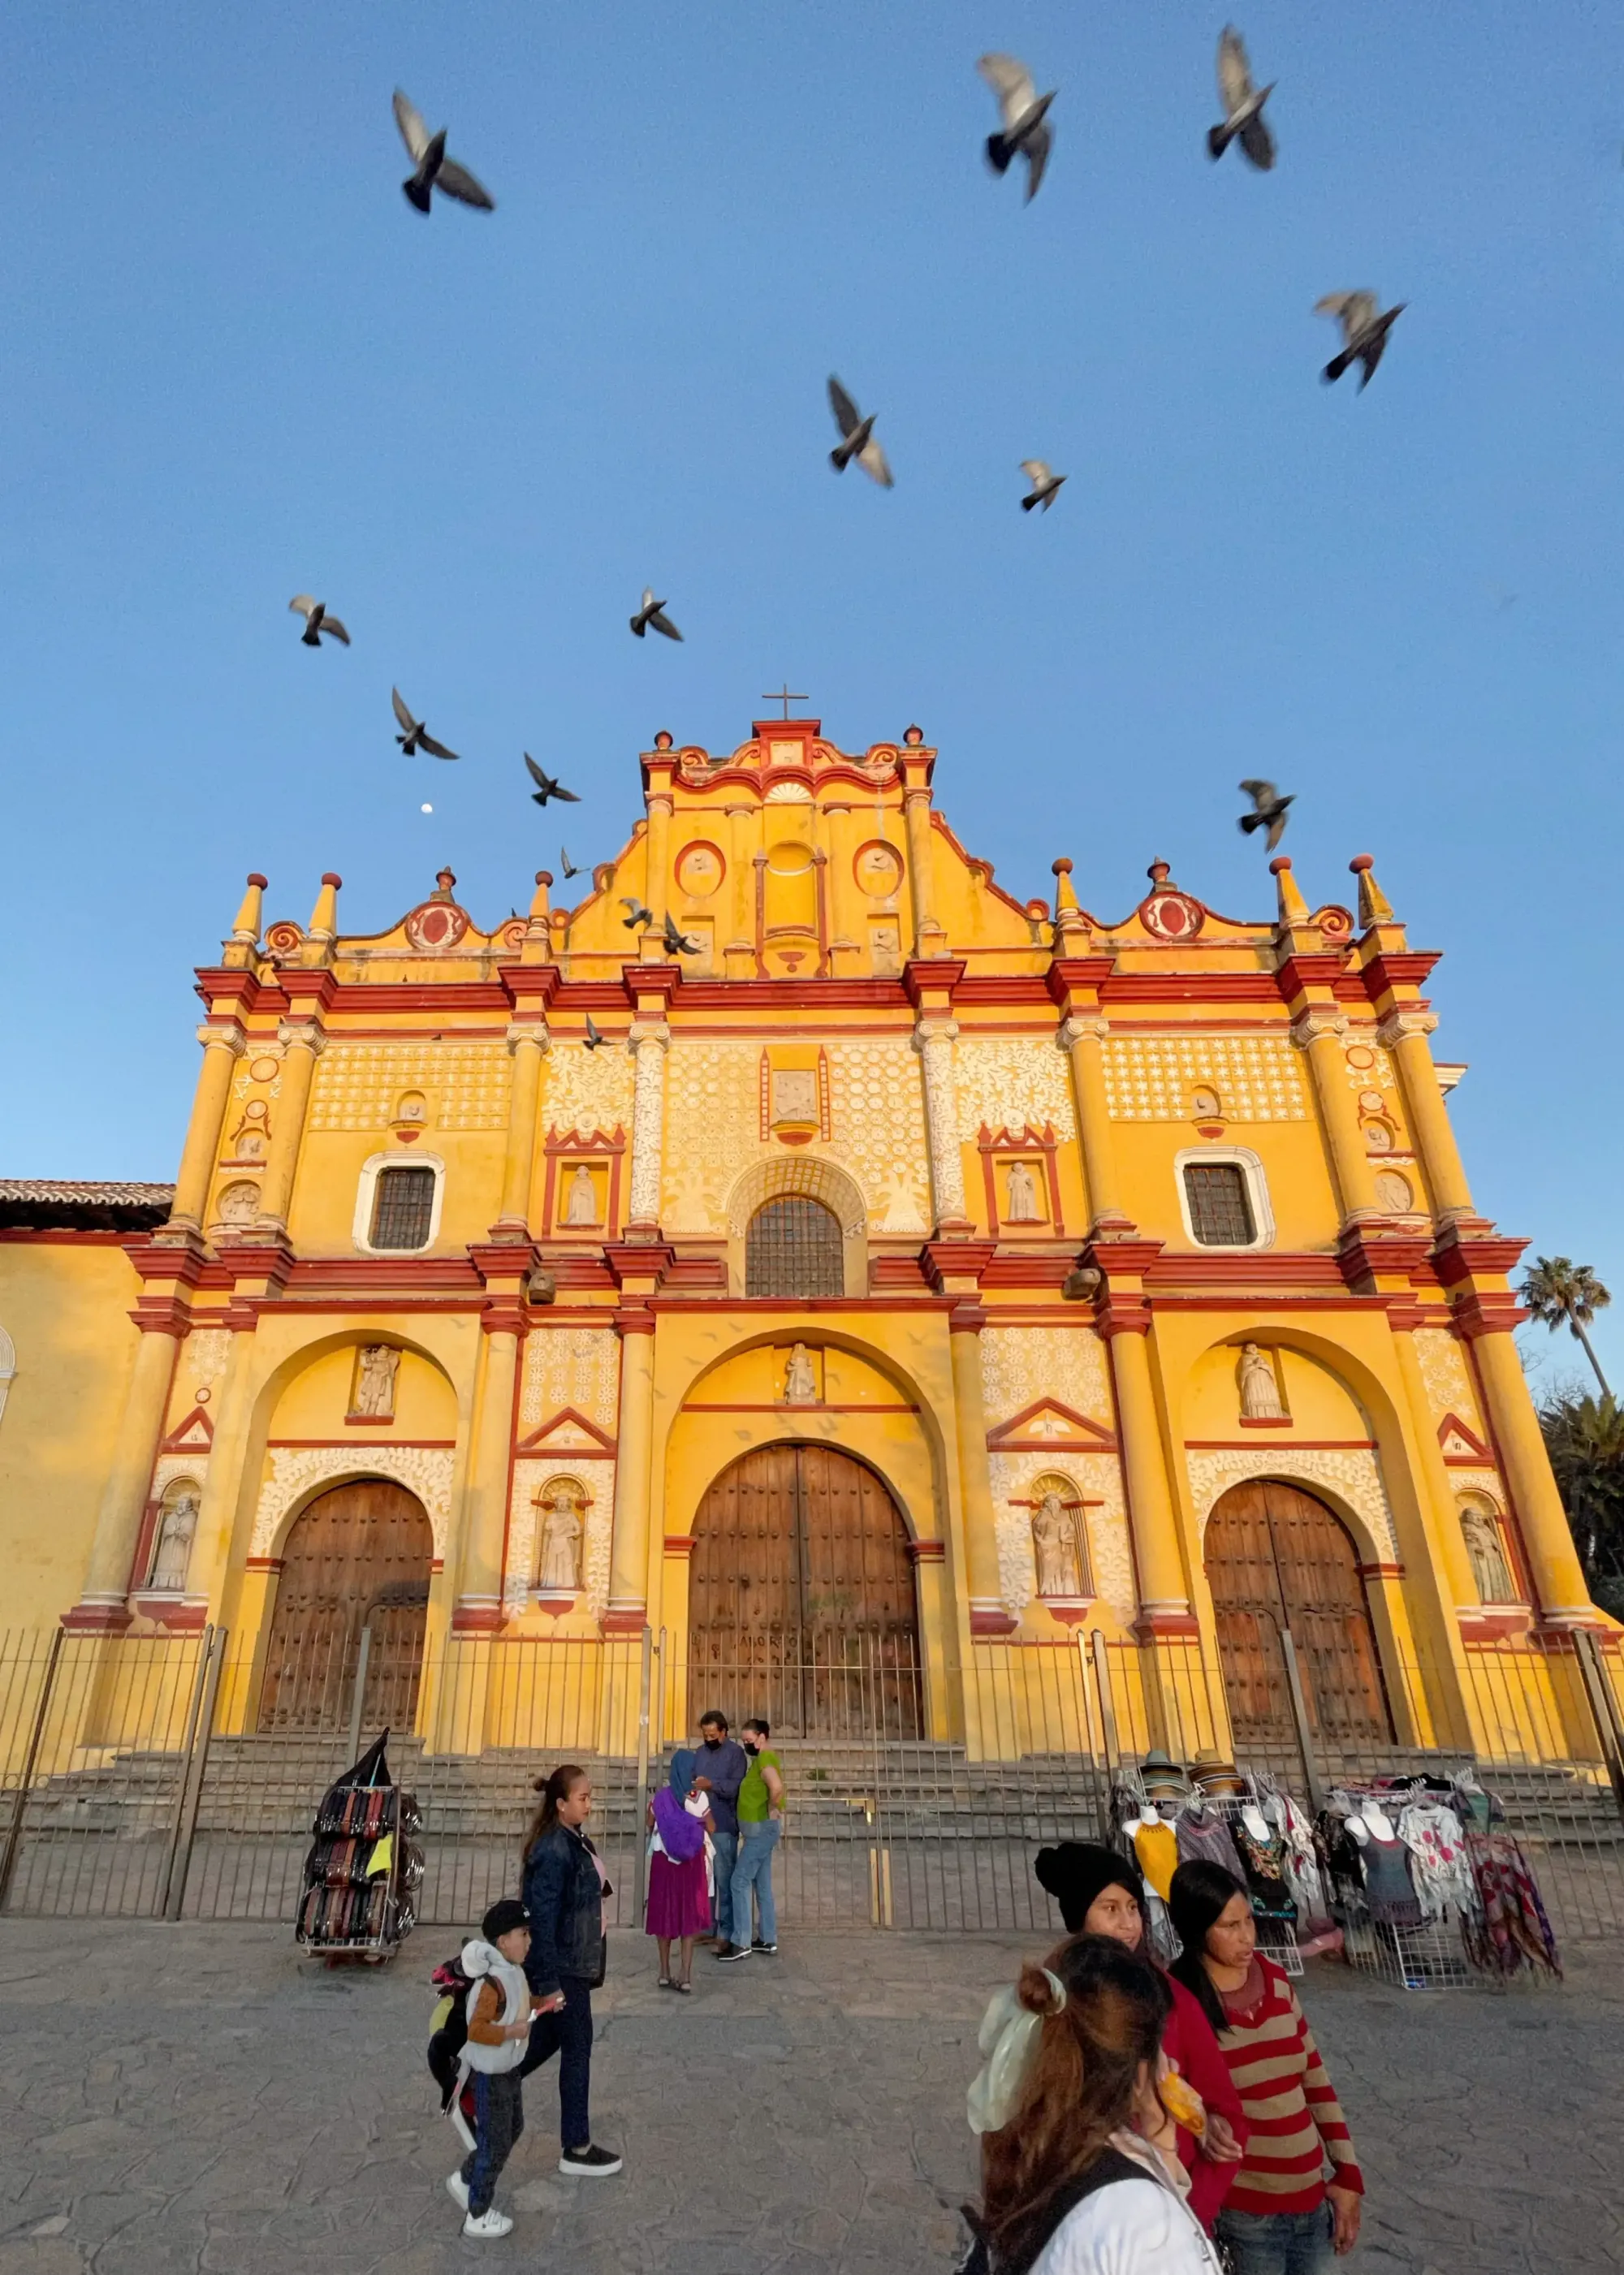 Vendors sell hats outside the Catedral de San Cristóbal Mártir in San Cristóbal de las Casas as a flock of pigeons takes flight overhead.